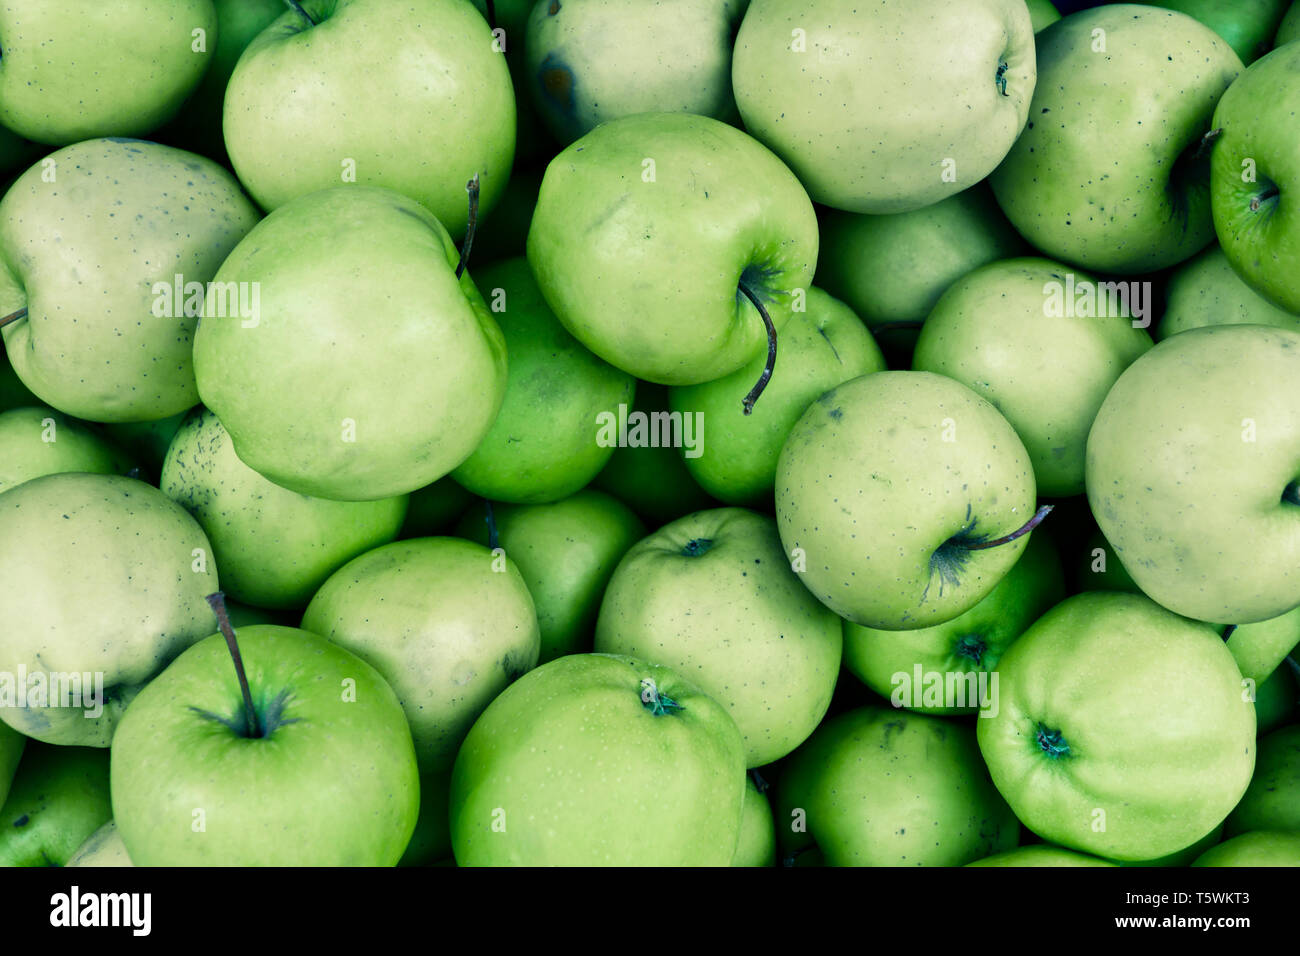 https://c8.alamy.com/comp/T5WKT3/organic-granny-smith-green-apples-from-garden-T5WKT3.jpg